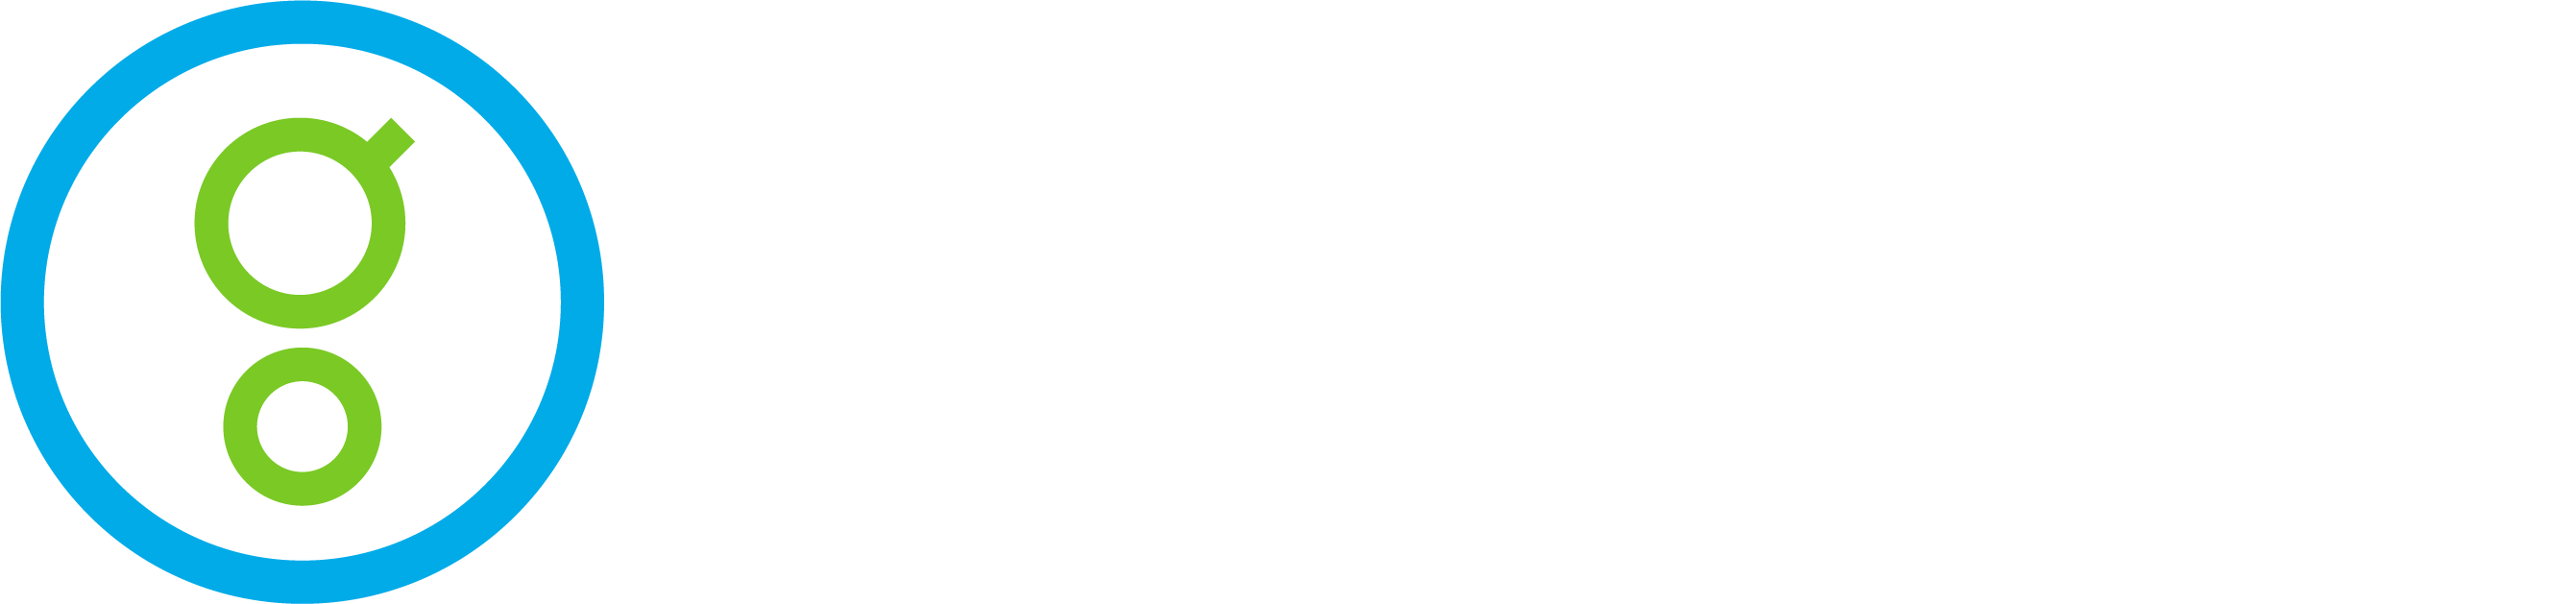 Geocent Logo White